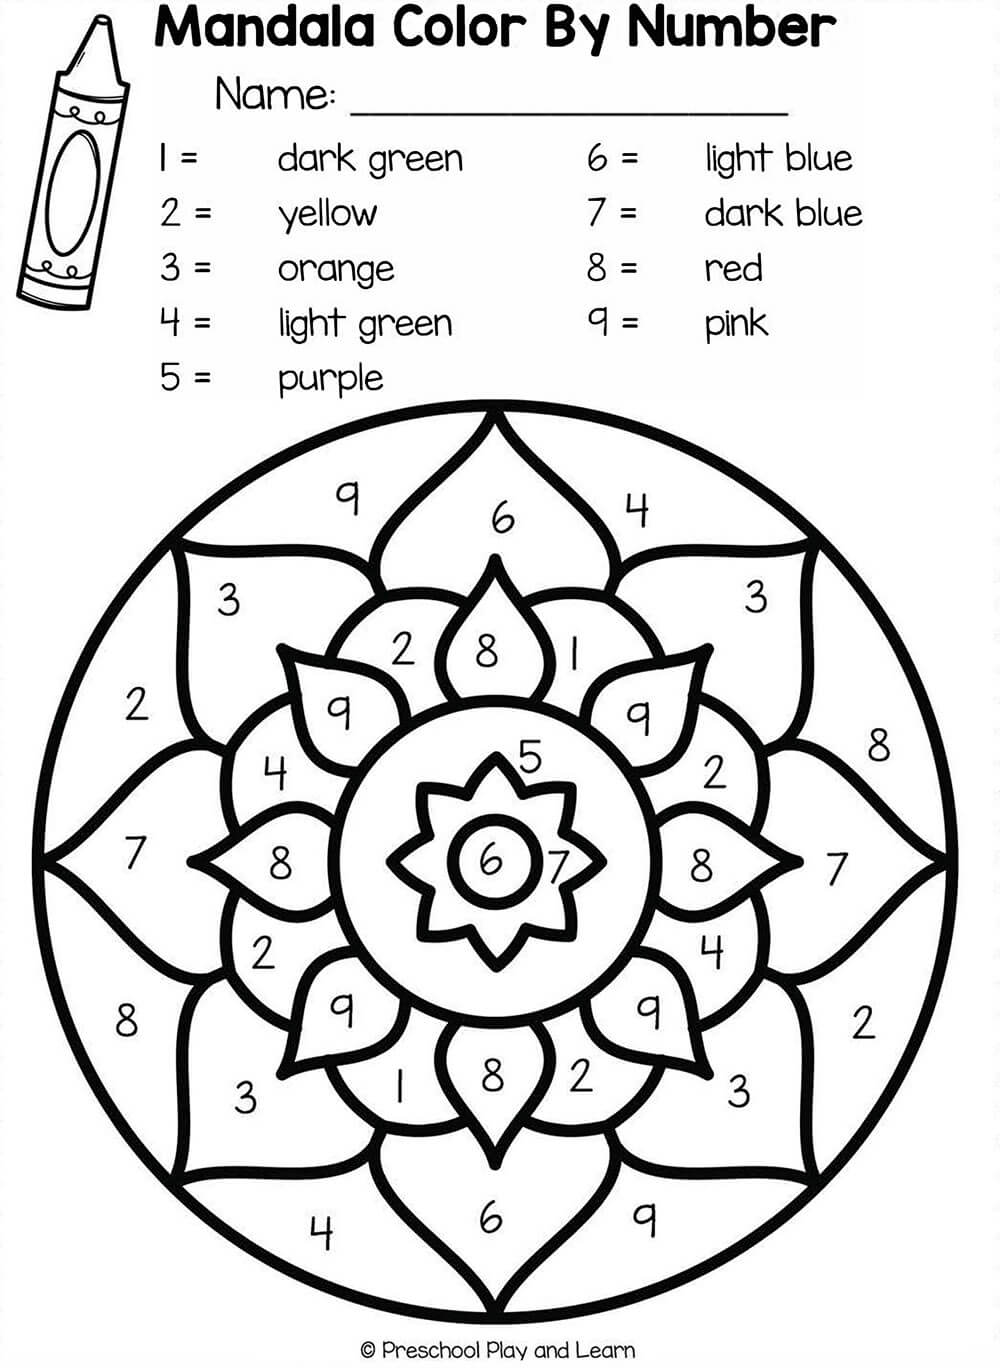 Mandala Color by Number - sheet 10